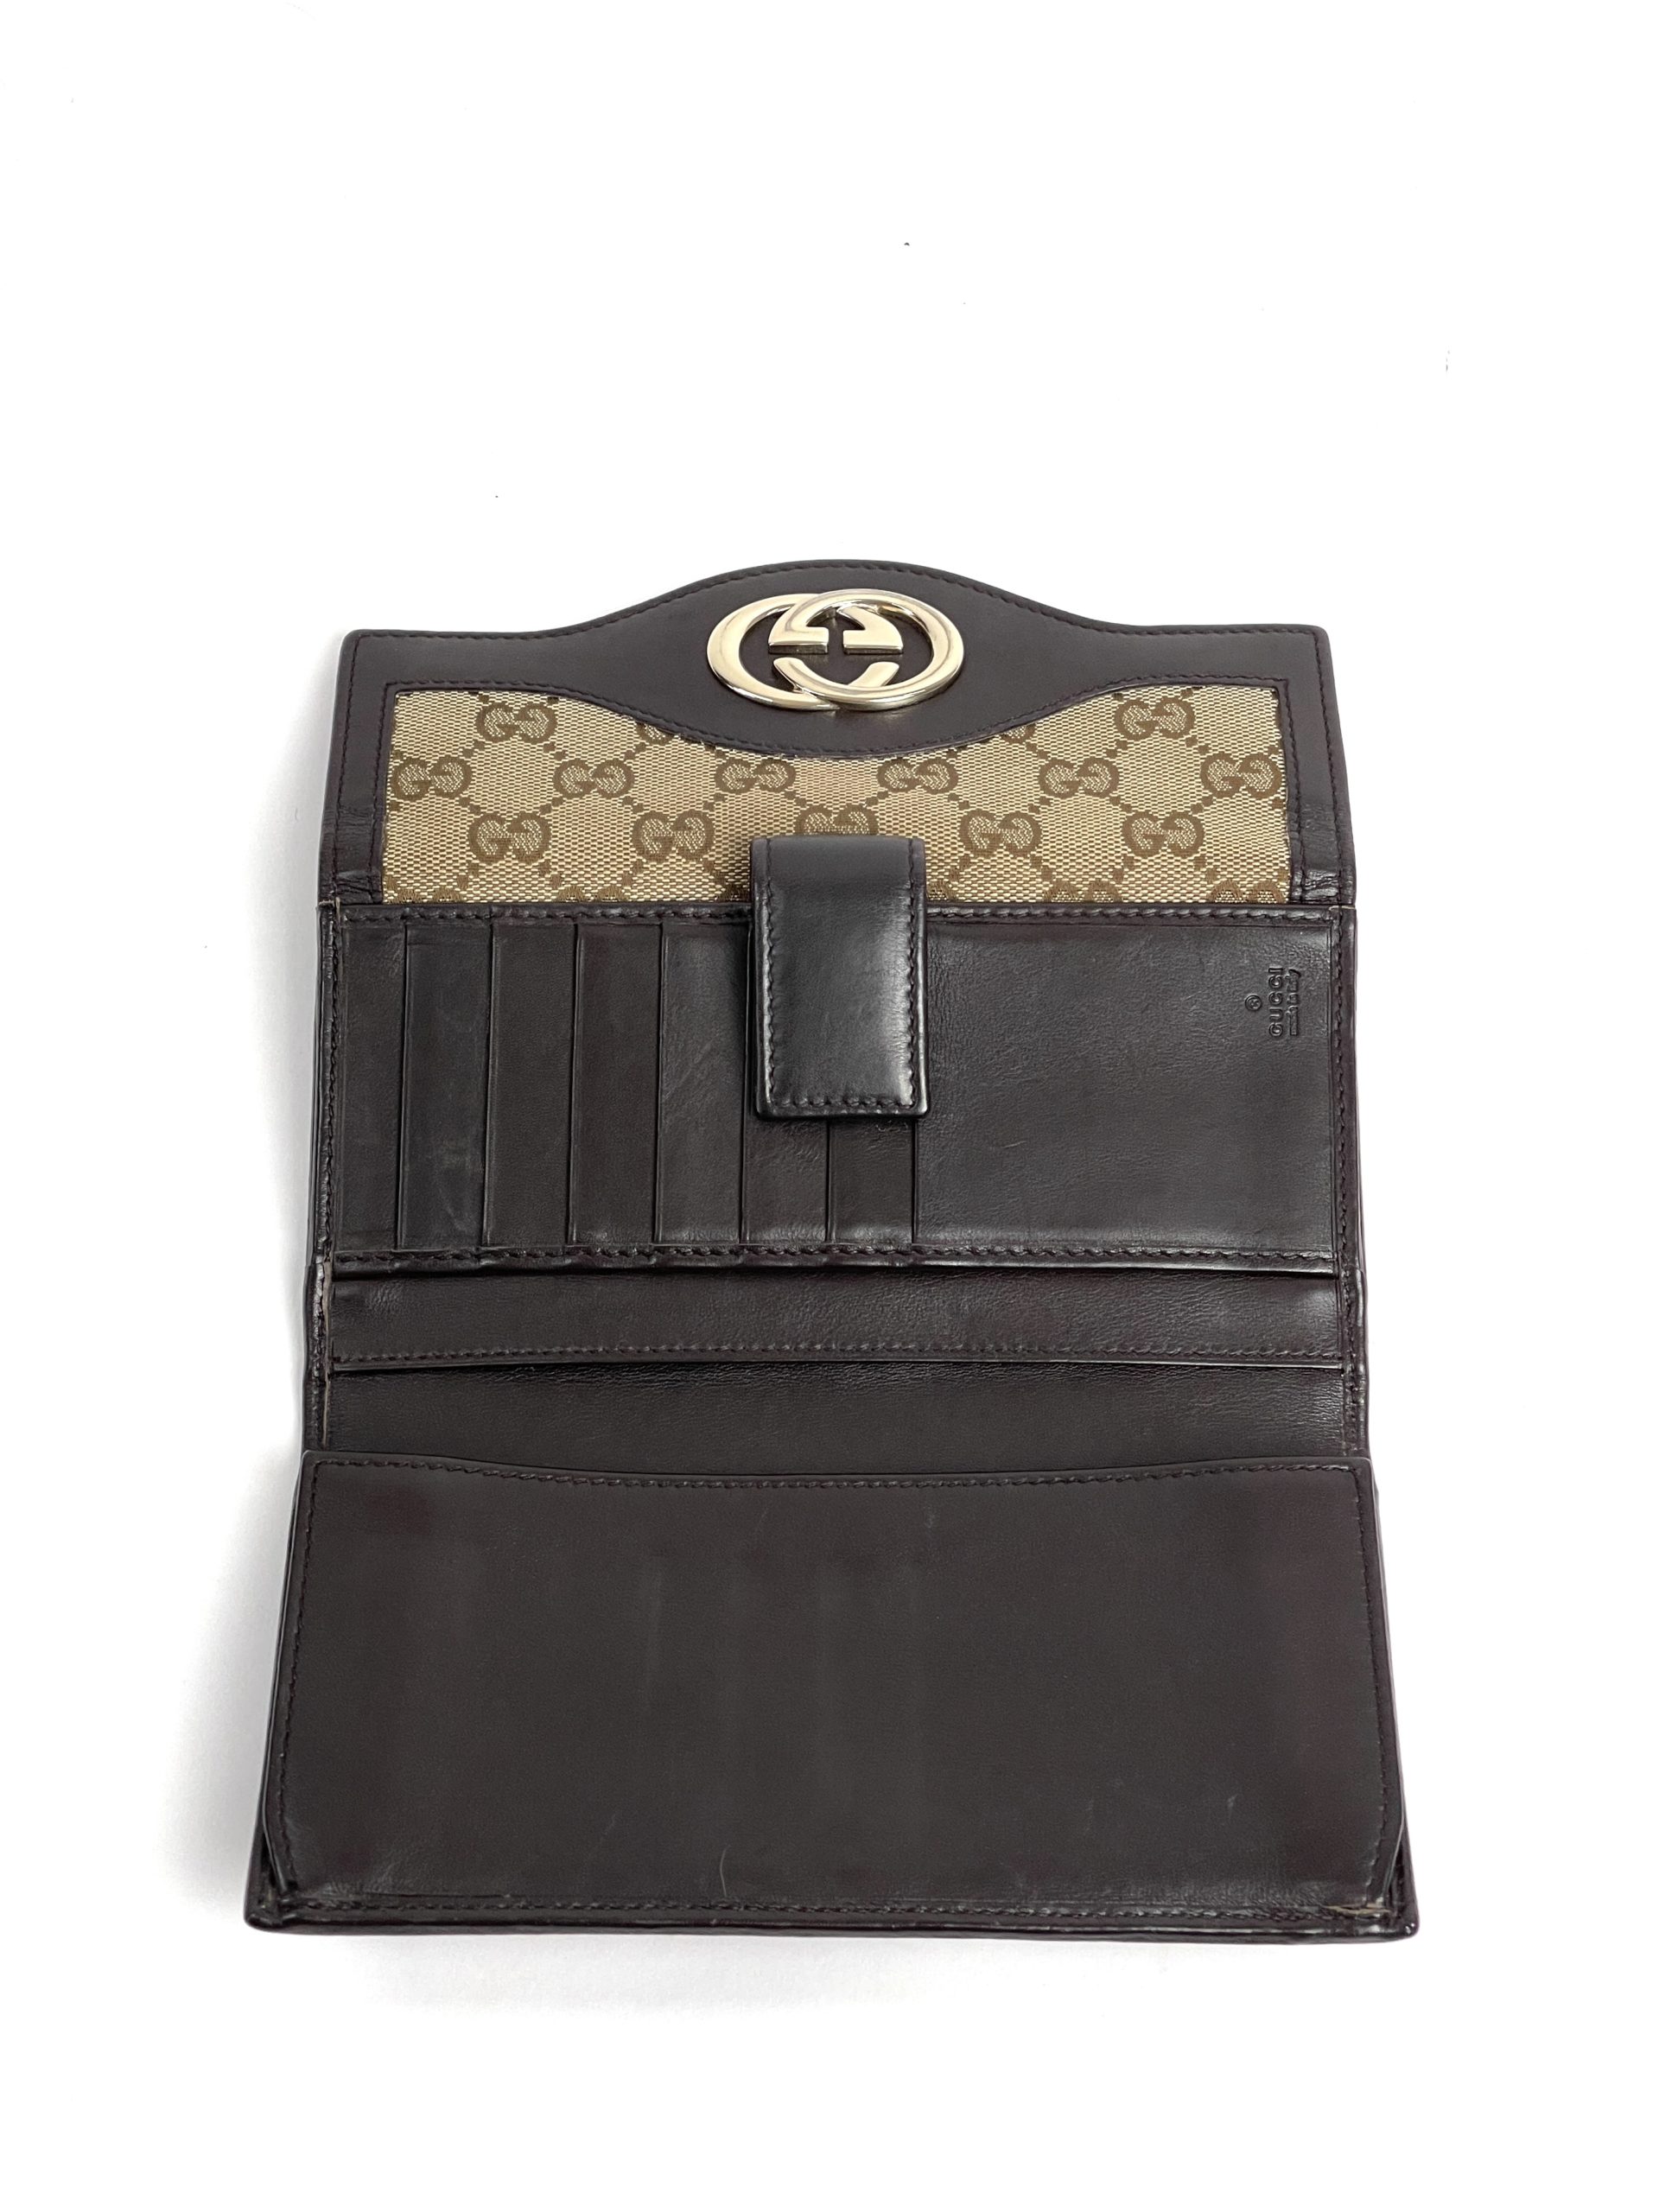 Gucci 'web Gg' Long Wallet, ModeSens